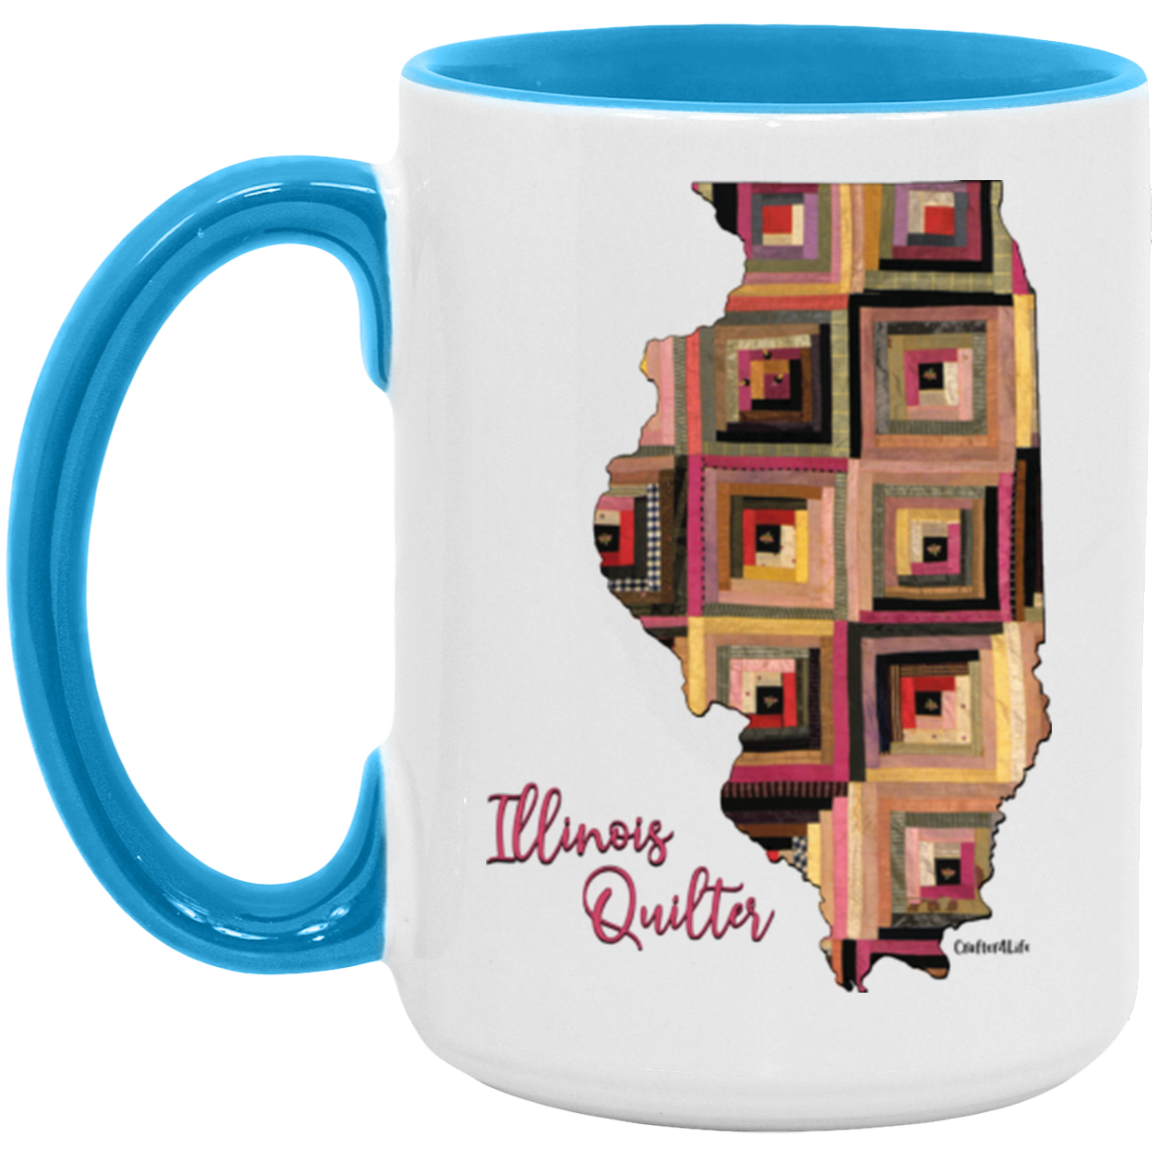 Illinois Quilter Mugs